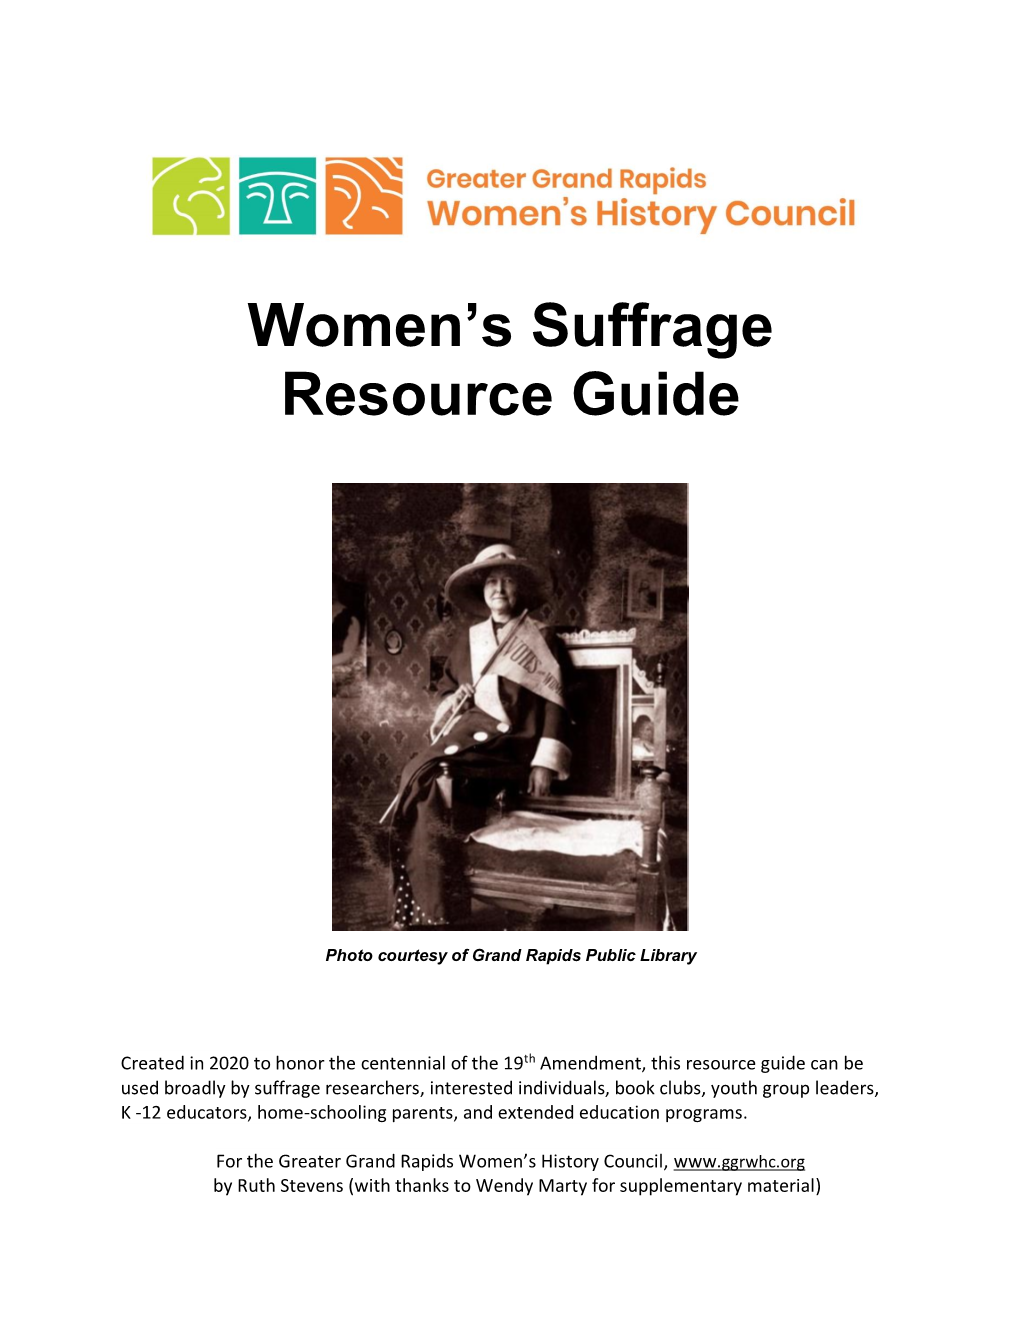 Women's Suffrage Resource Guide